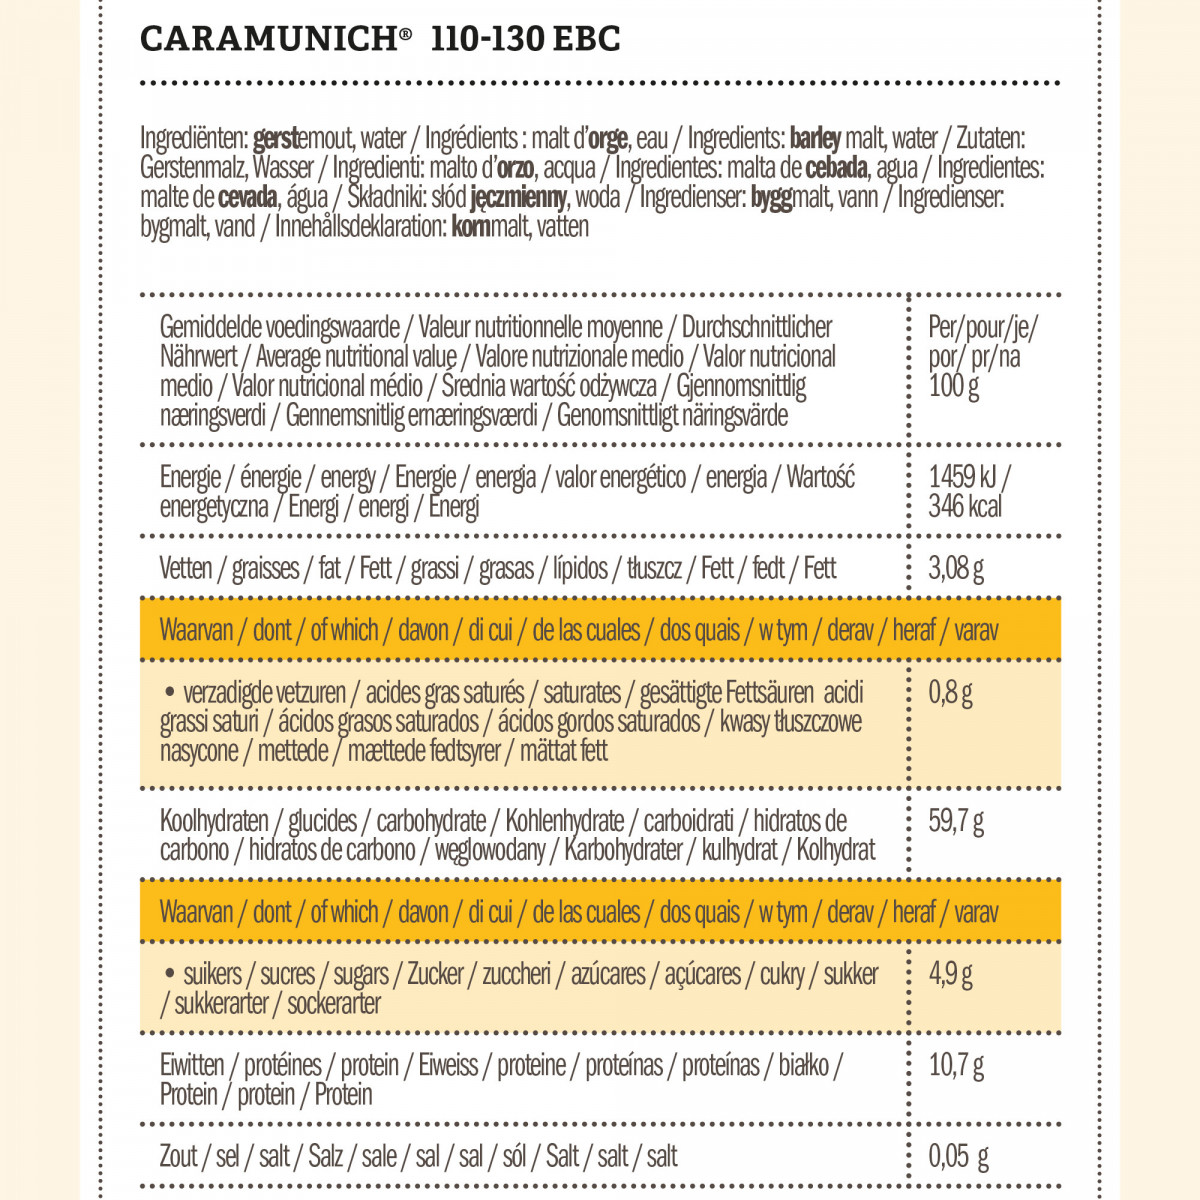 Weyermann® CaraMunich® type 1 80-100 EBC 25 kg